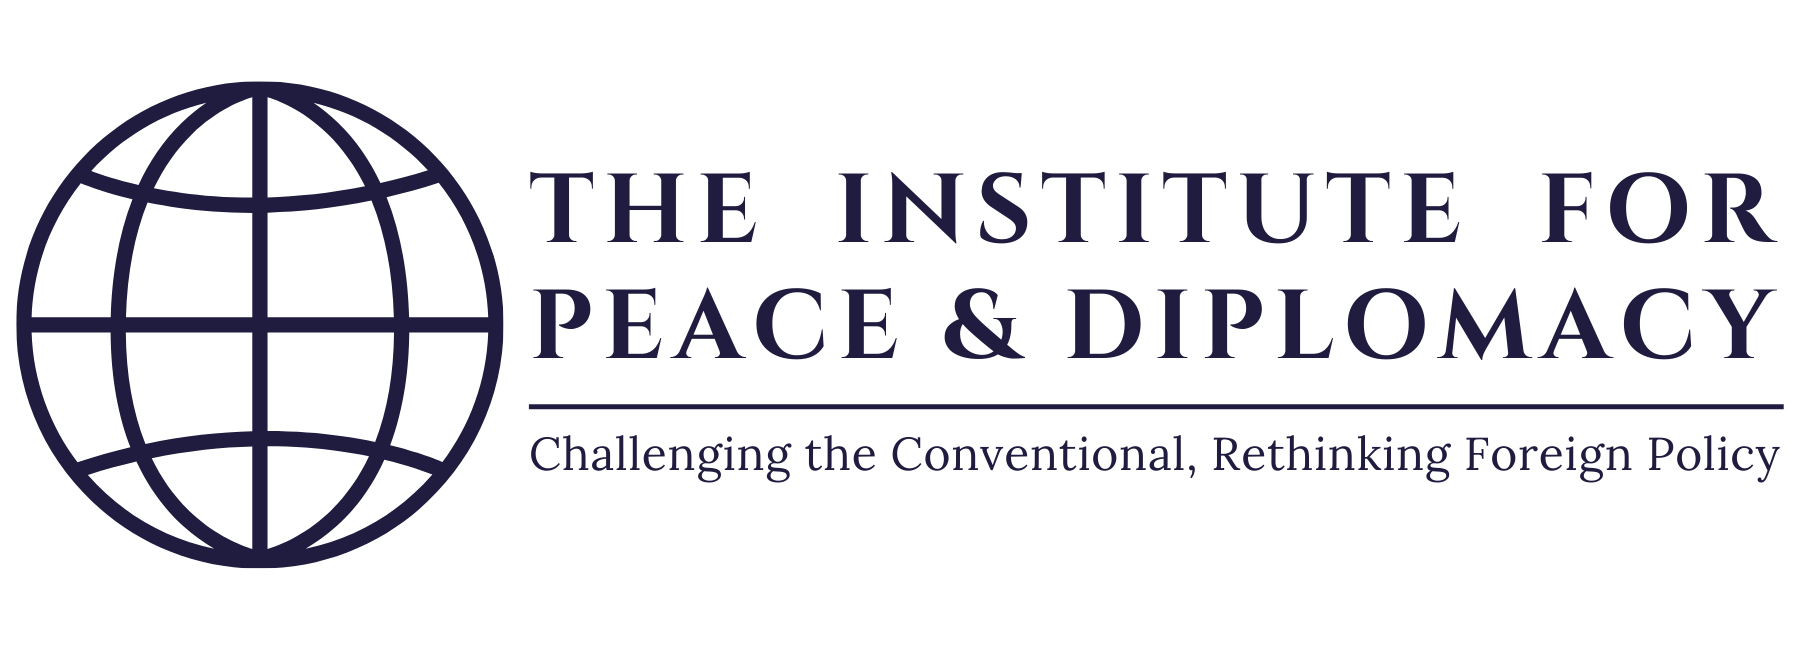 Institute for Peace & Diplomacy logo